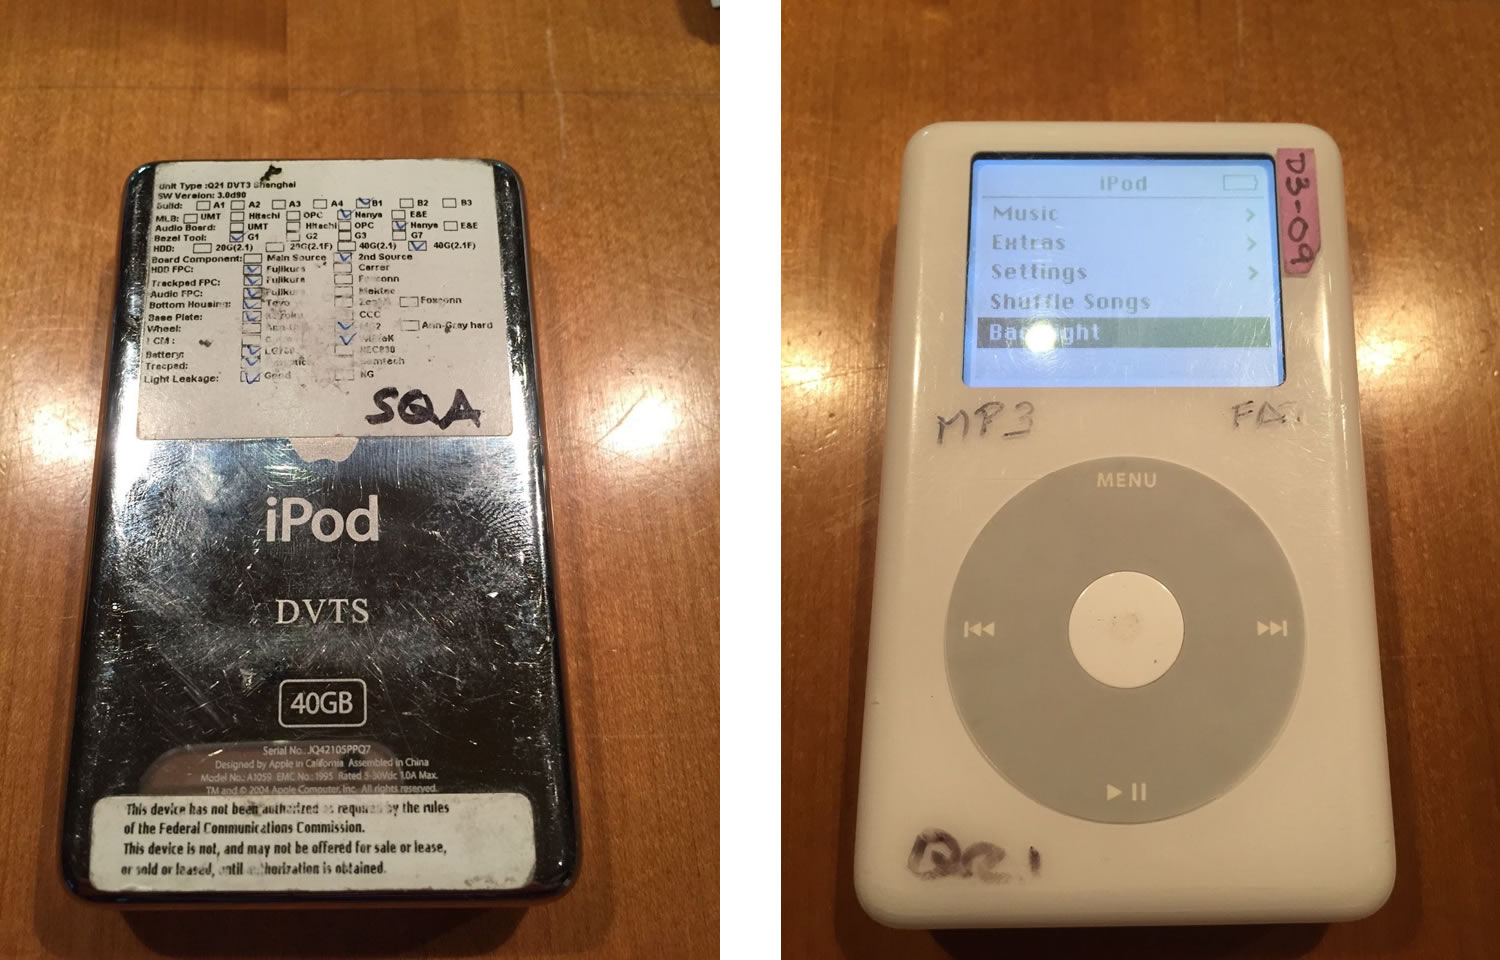 ｢iPod｣の試作機、eBayにて販売中 ｰ お値段約52万円也